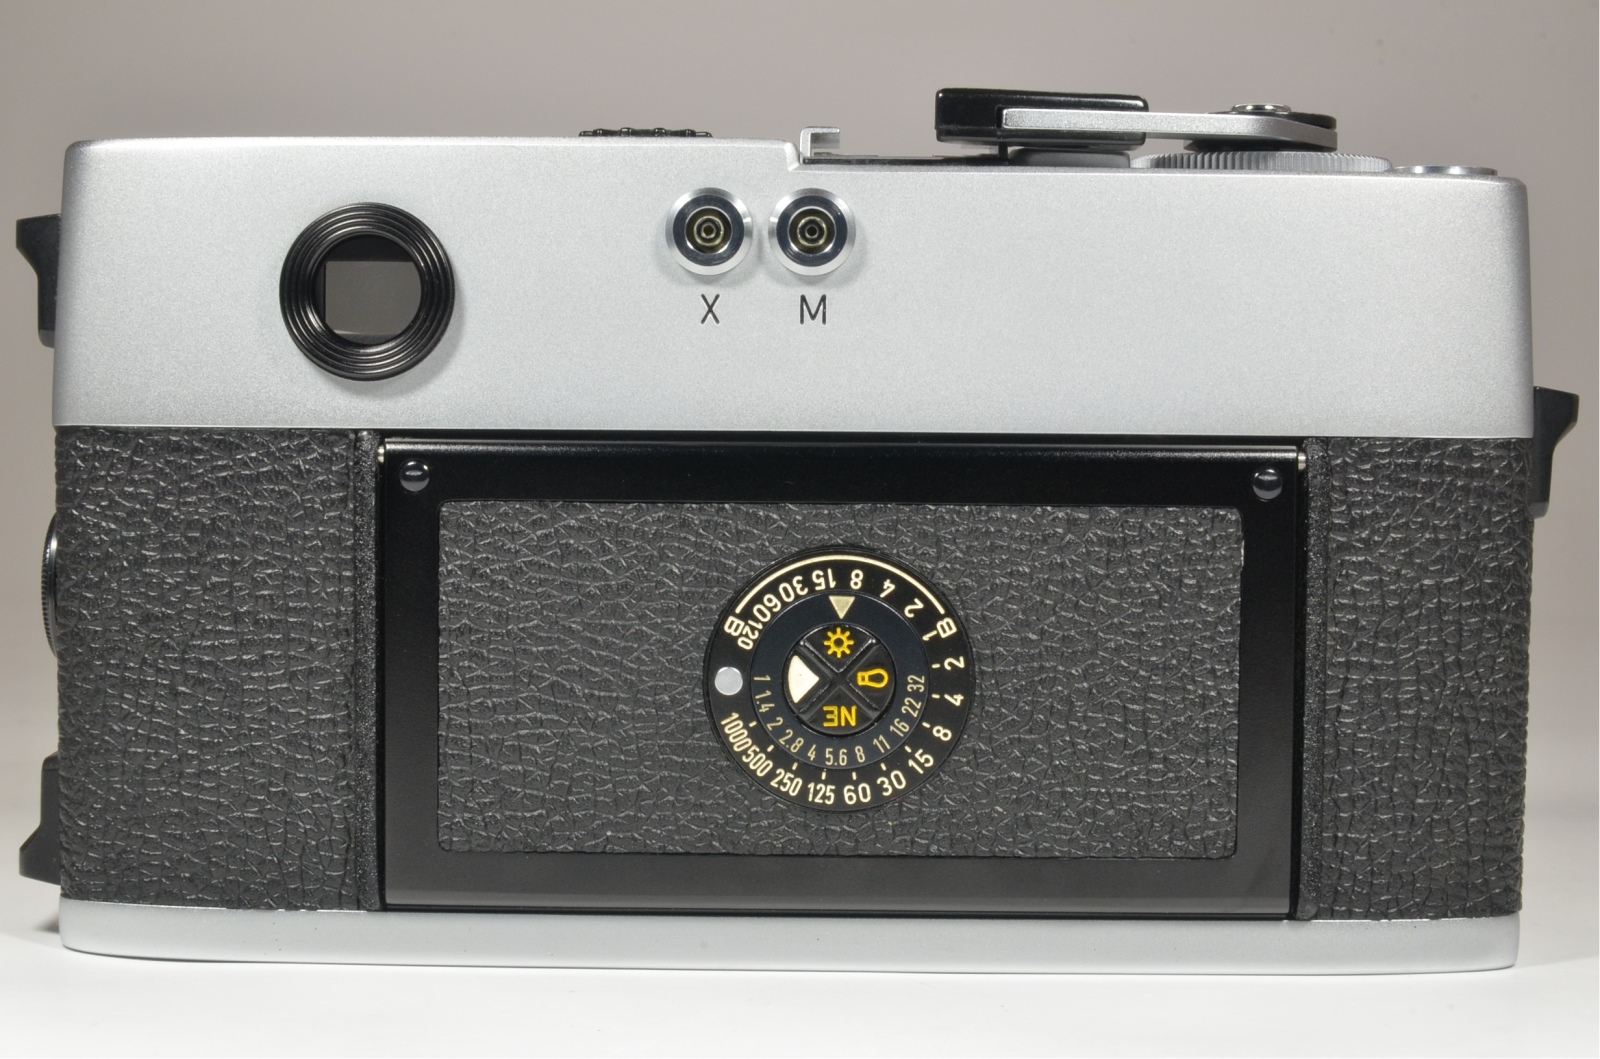 leica m5 chrome 3 lug year 1973 rangefinder camera with half case